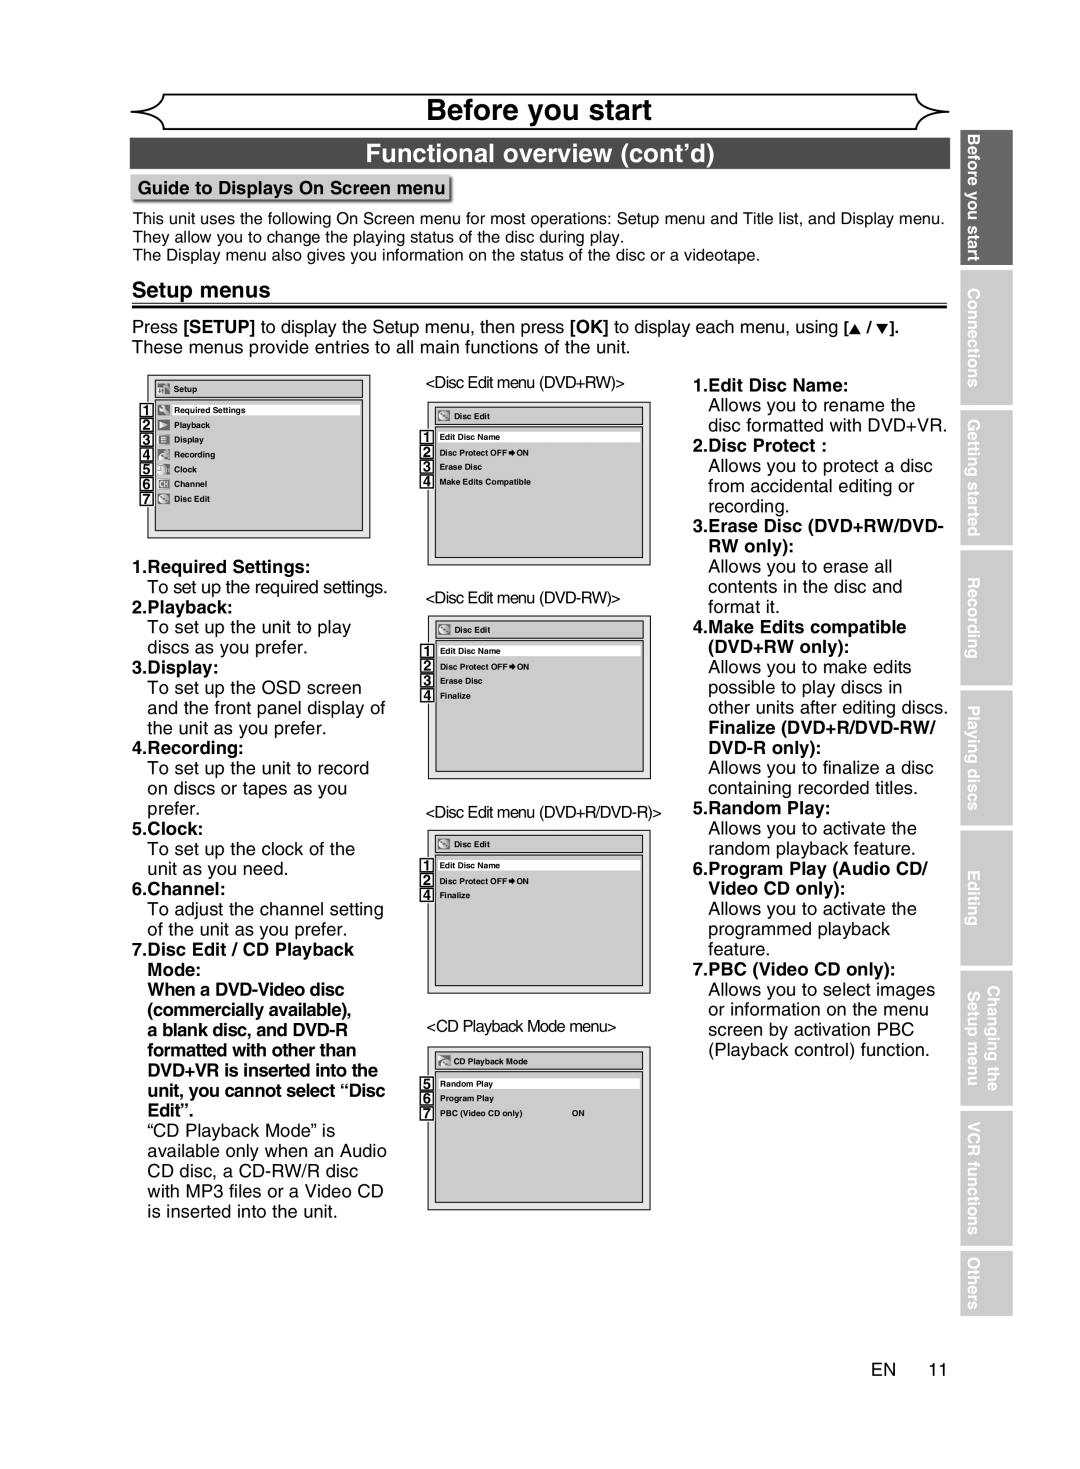 Magnavox cmwR20v6 Setup menus, Before you start, Functional overview cont’d, Disc Edit menu DVD+RW, CD Playback Mode menu 